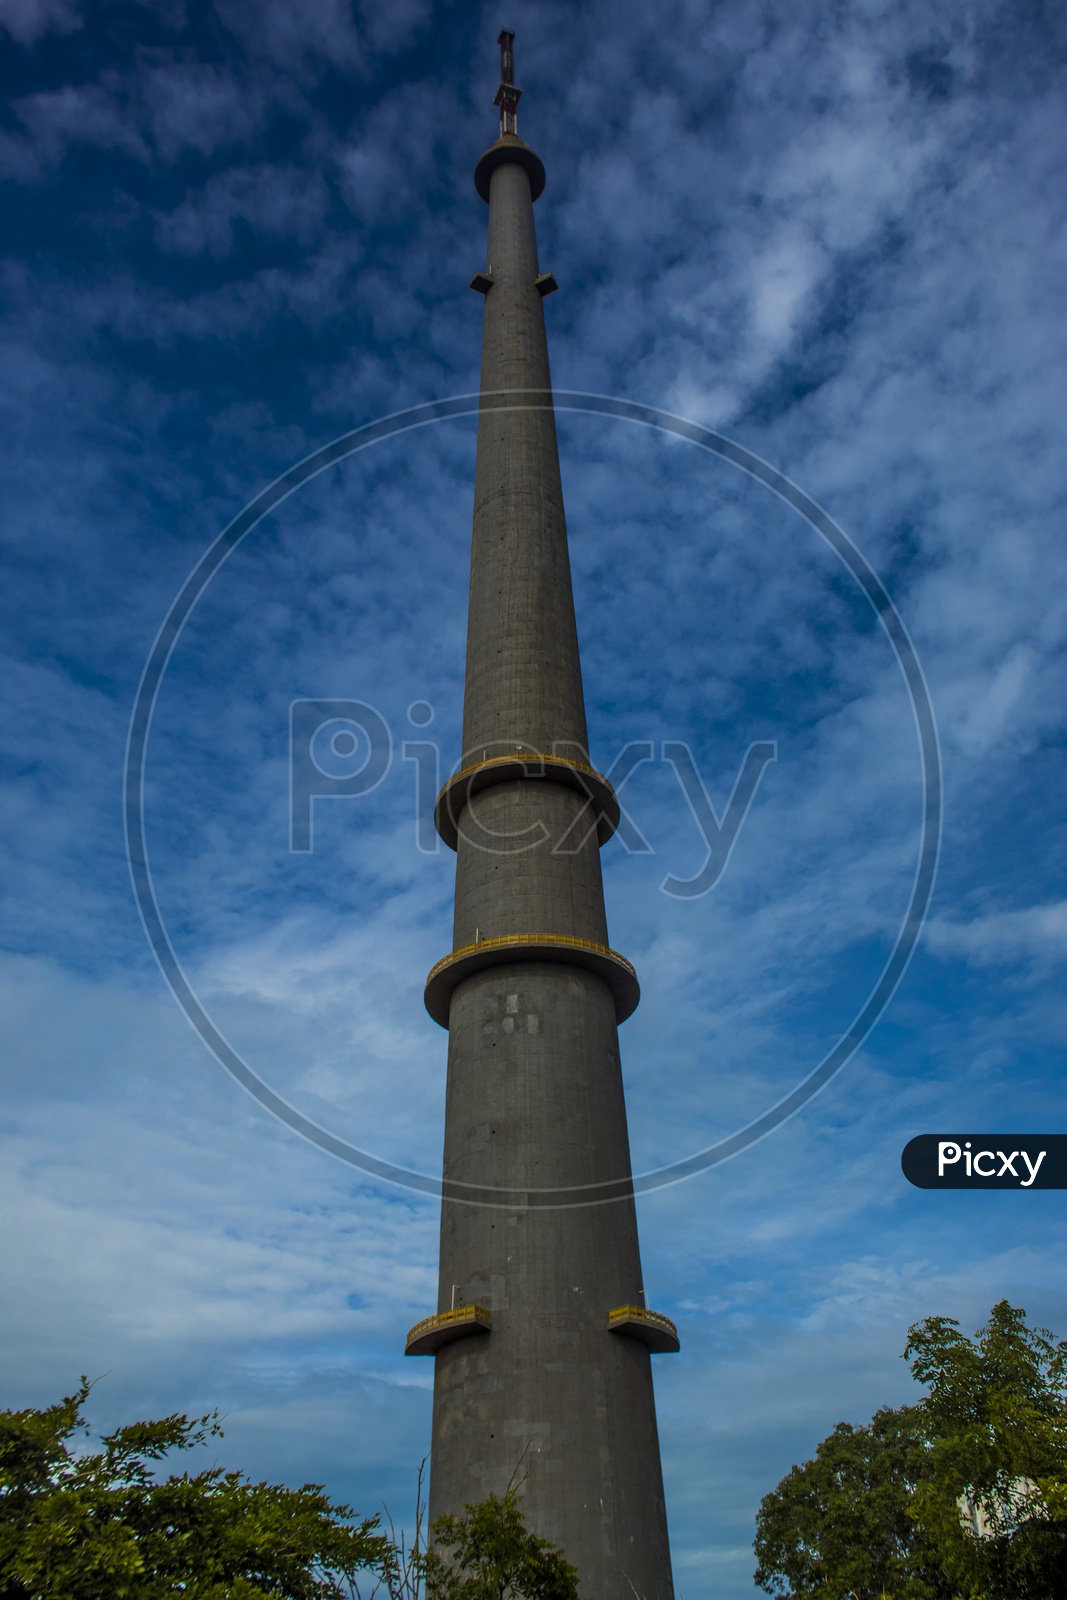 The Rameswaram TV Tower